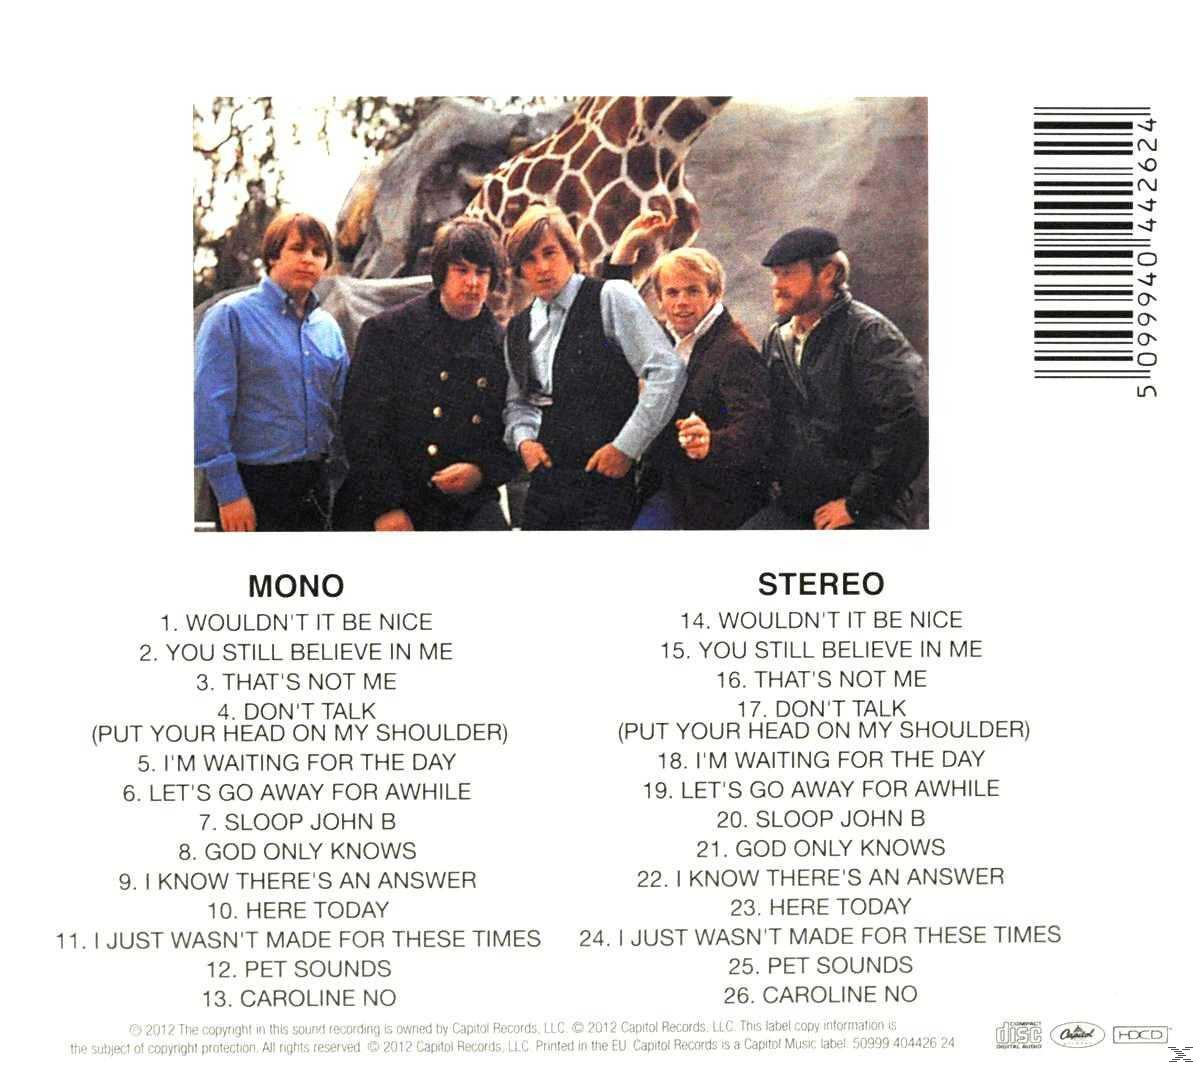 The Beach Boys - Sounds (CD) Stereo) & Pet - (Mono